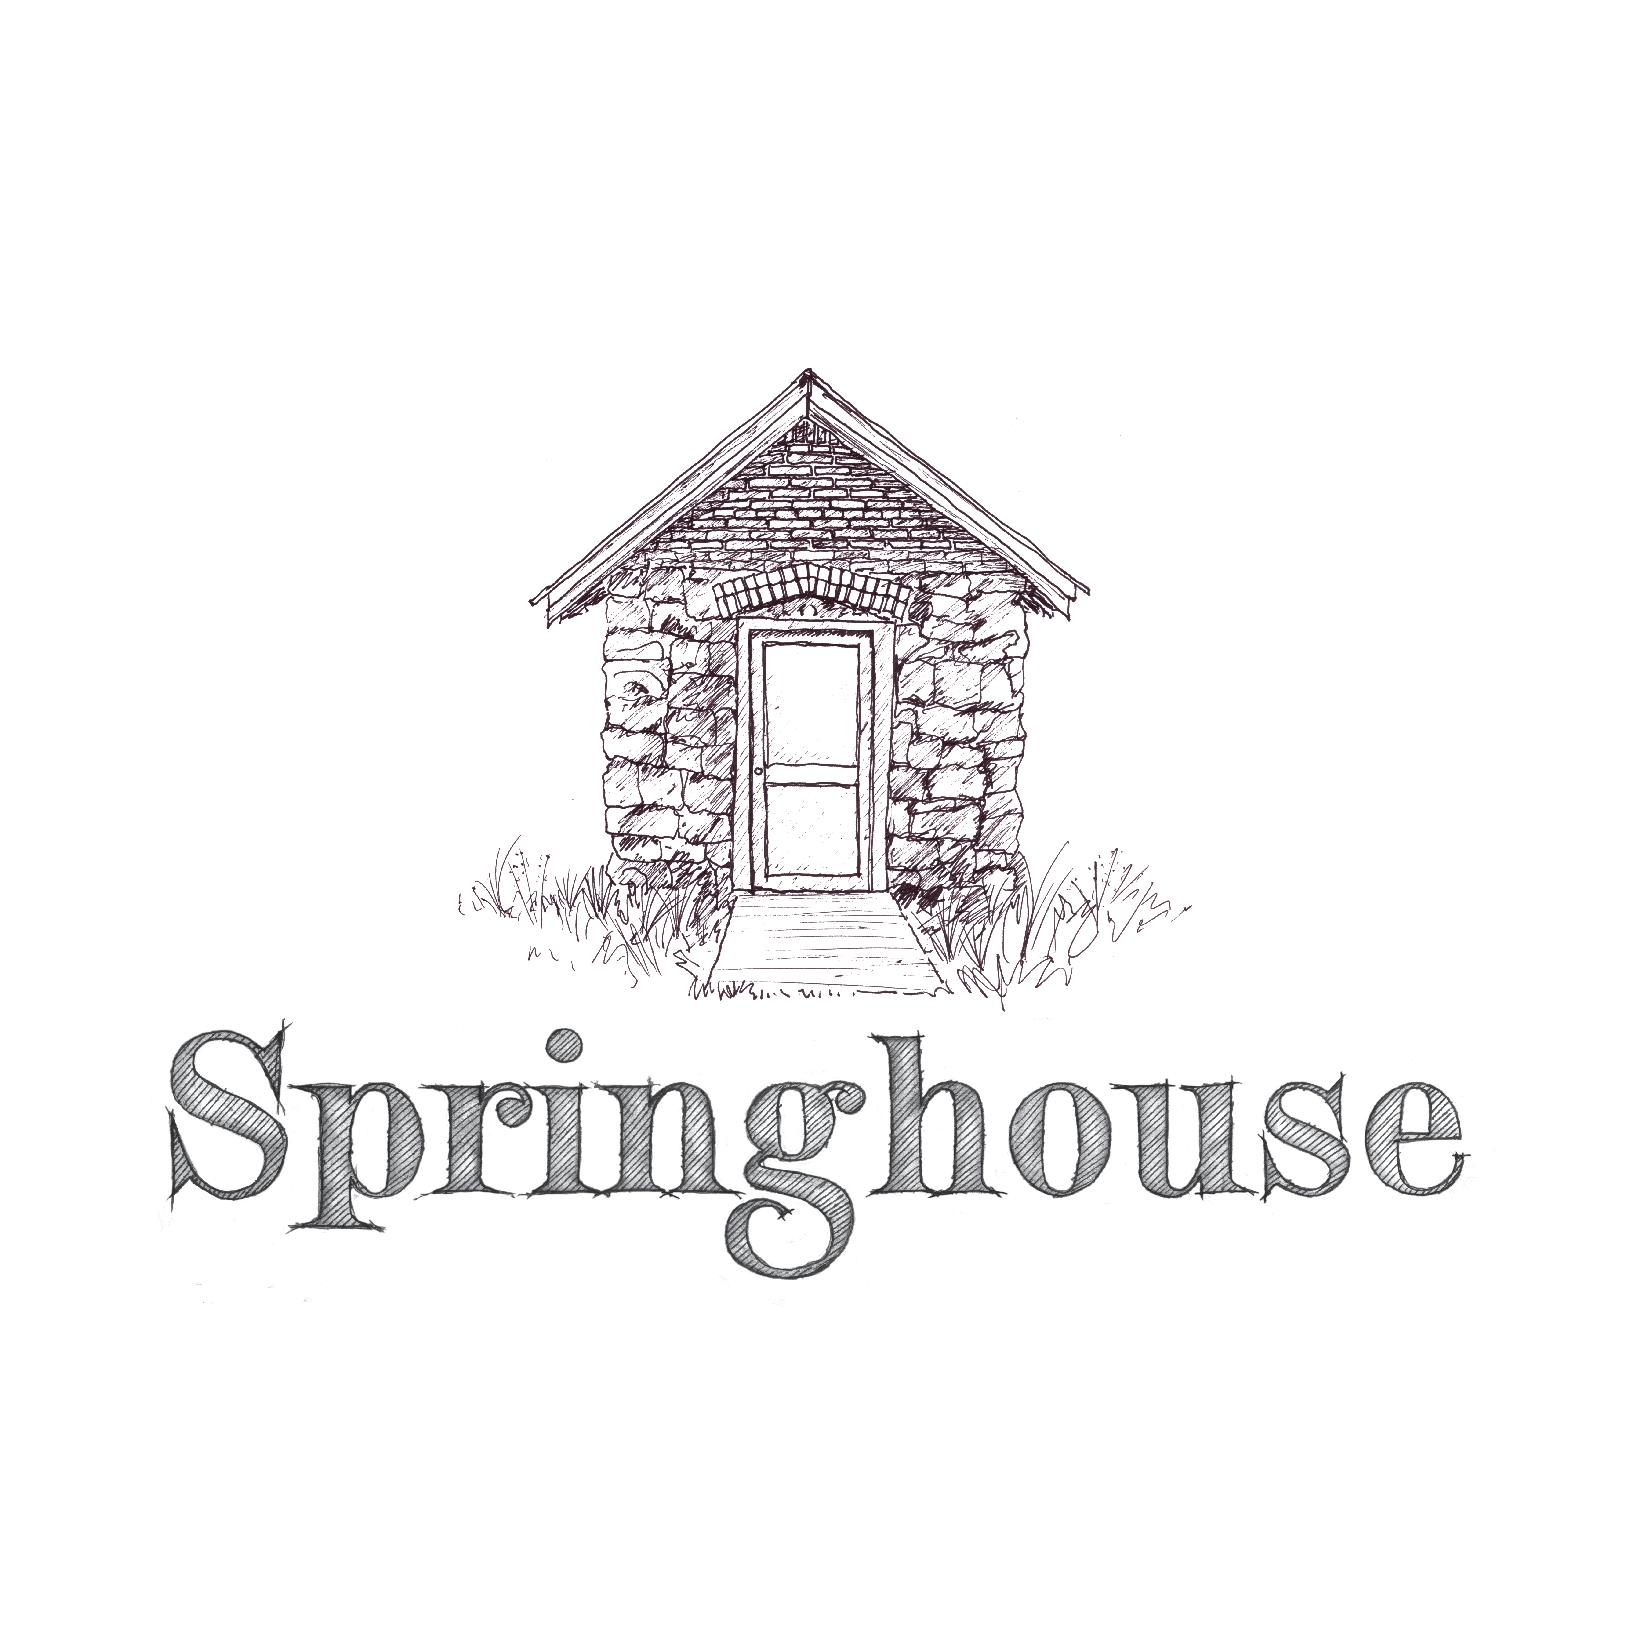 Springhouse-page-001.jpg